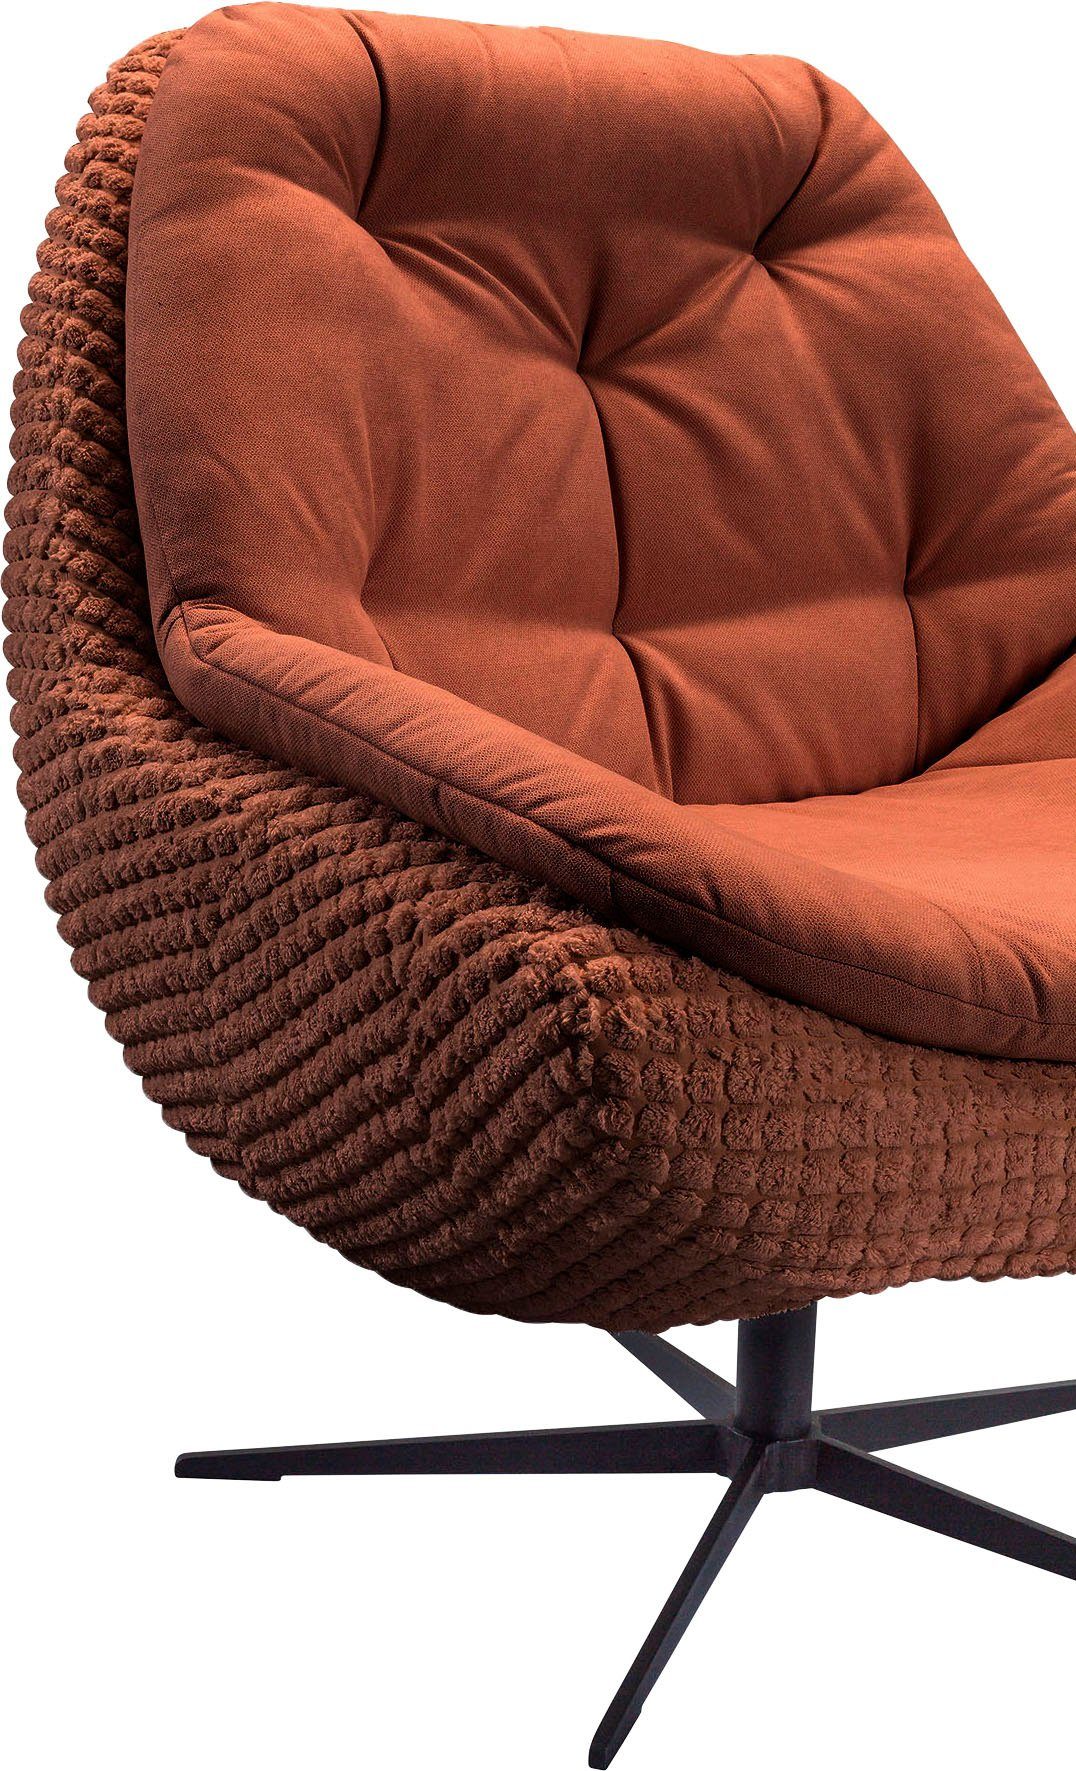 Drehsessel - bequem elegantem exxpo gepolstert sofa Drehsessel, Metall-Sternfuss mit rost fashion